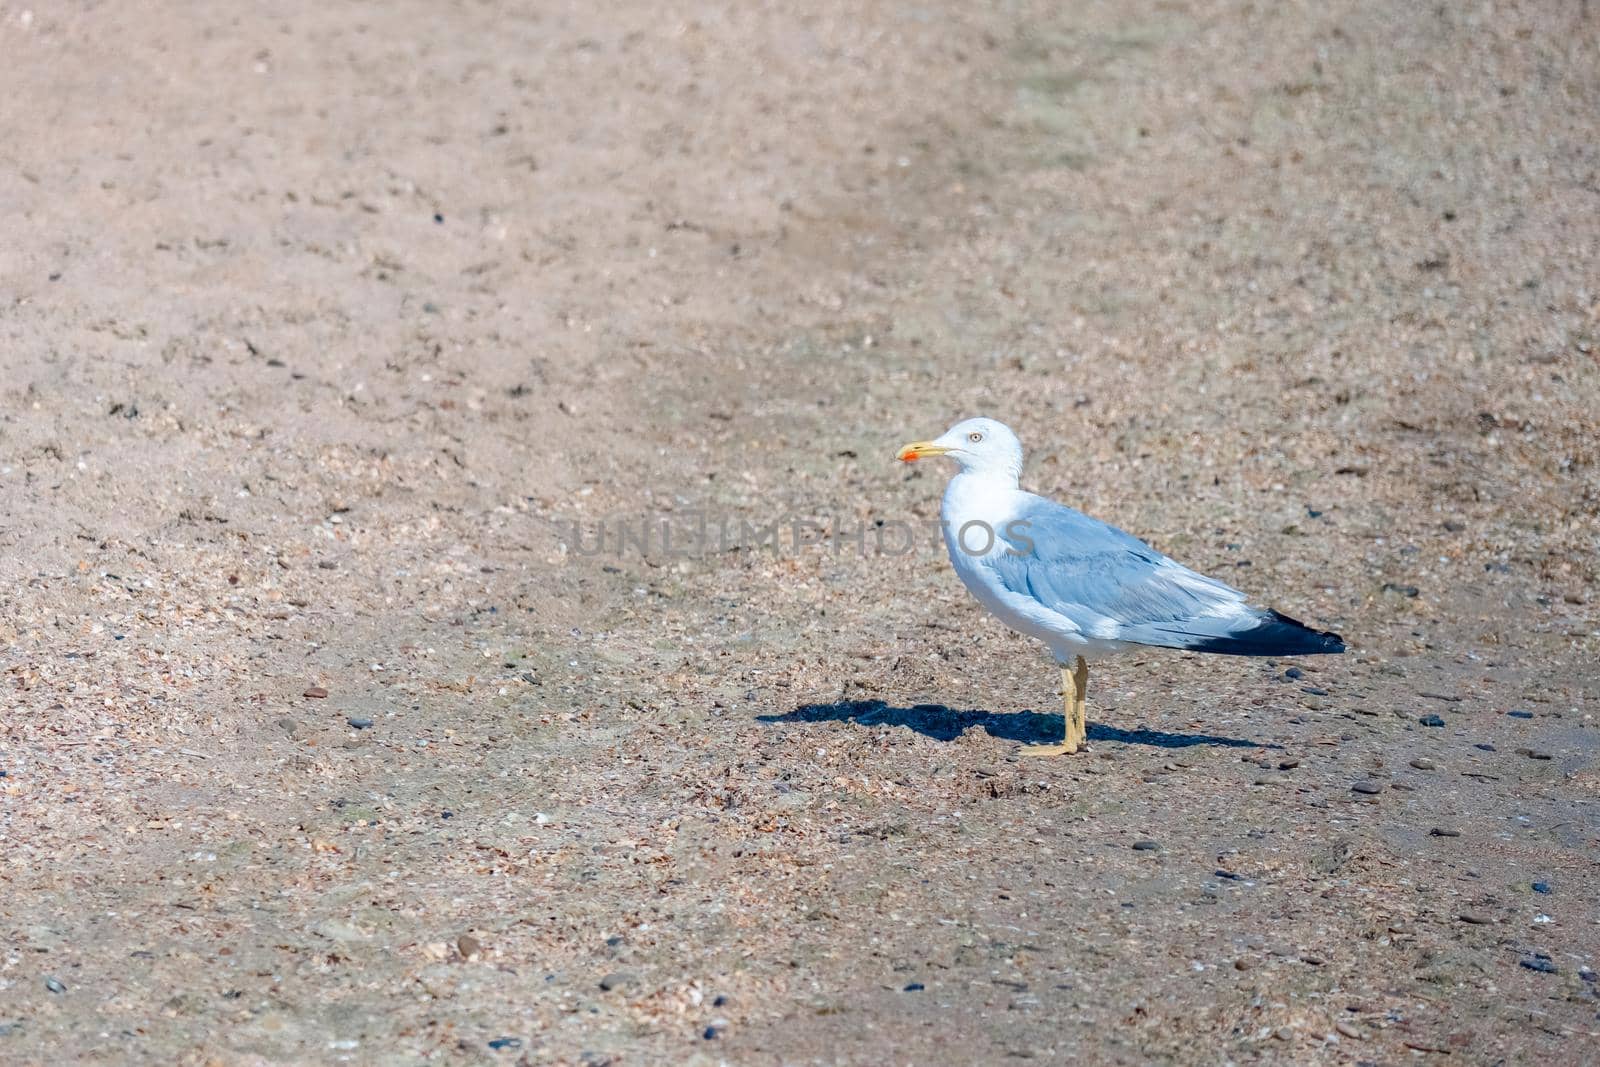 A lone white gull on the coastal sand. High quality photo